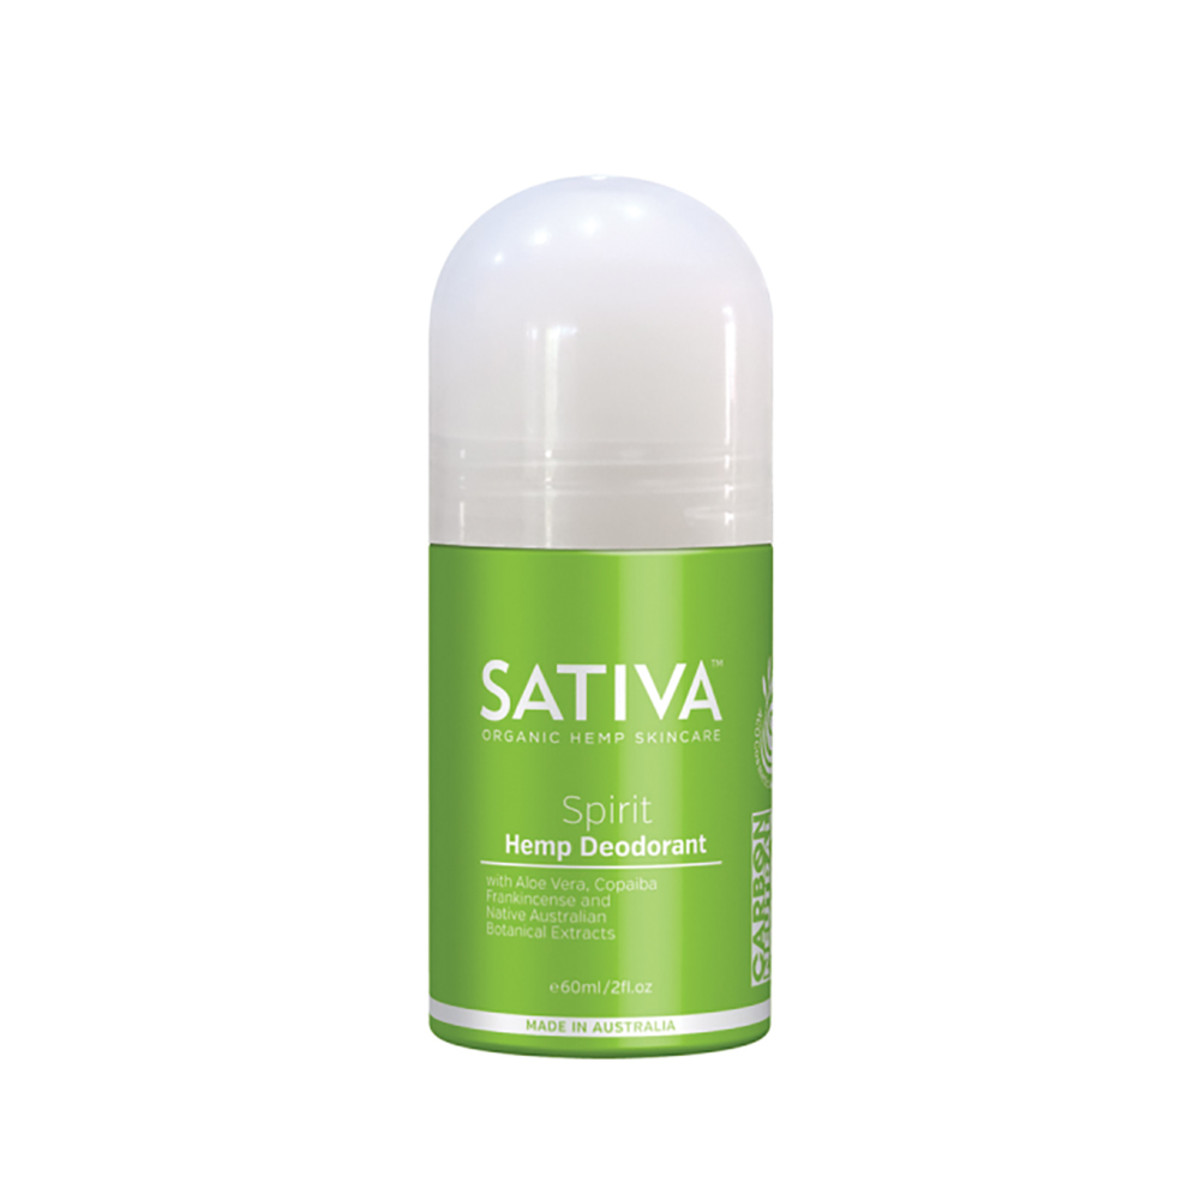 Sativa Hemp Deodorant Spirit